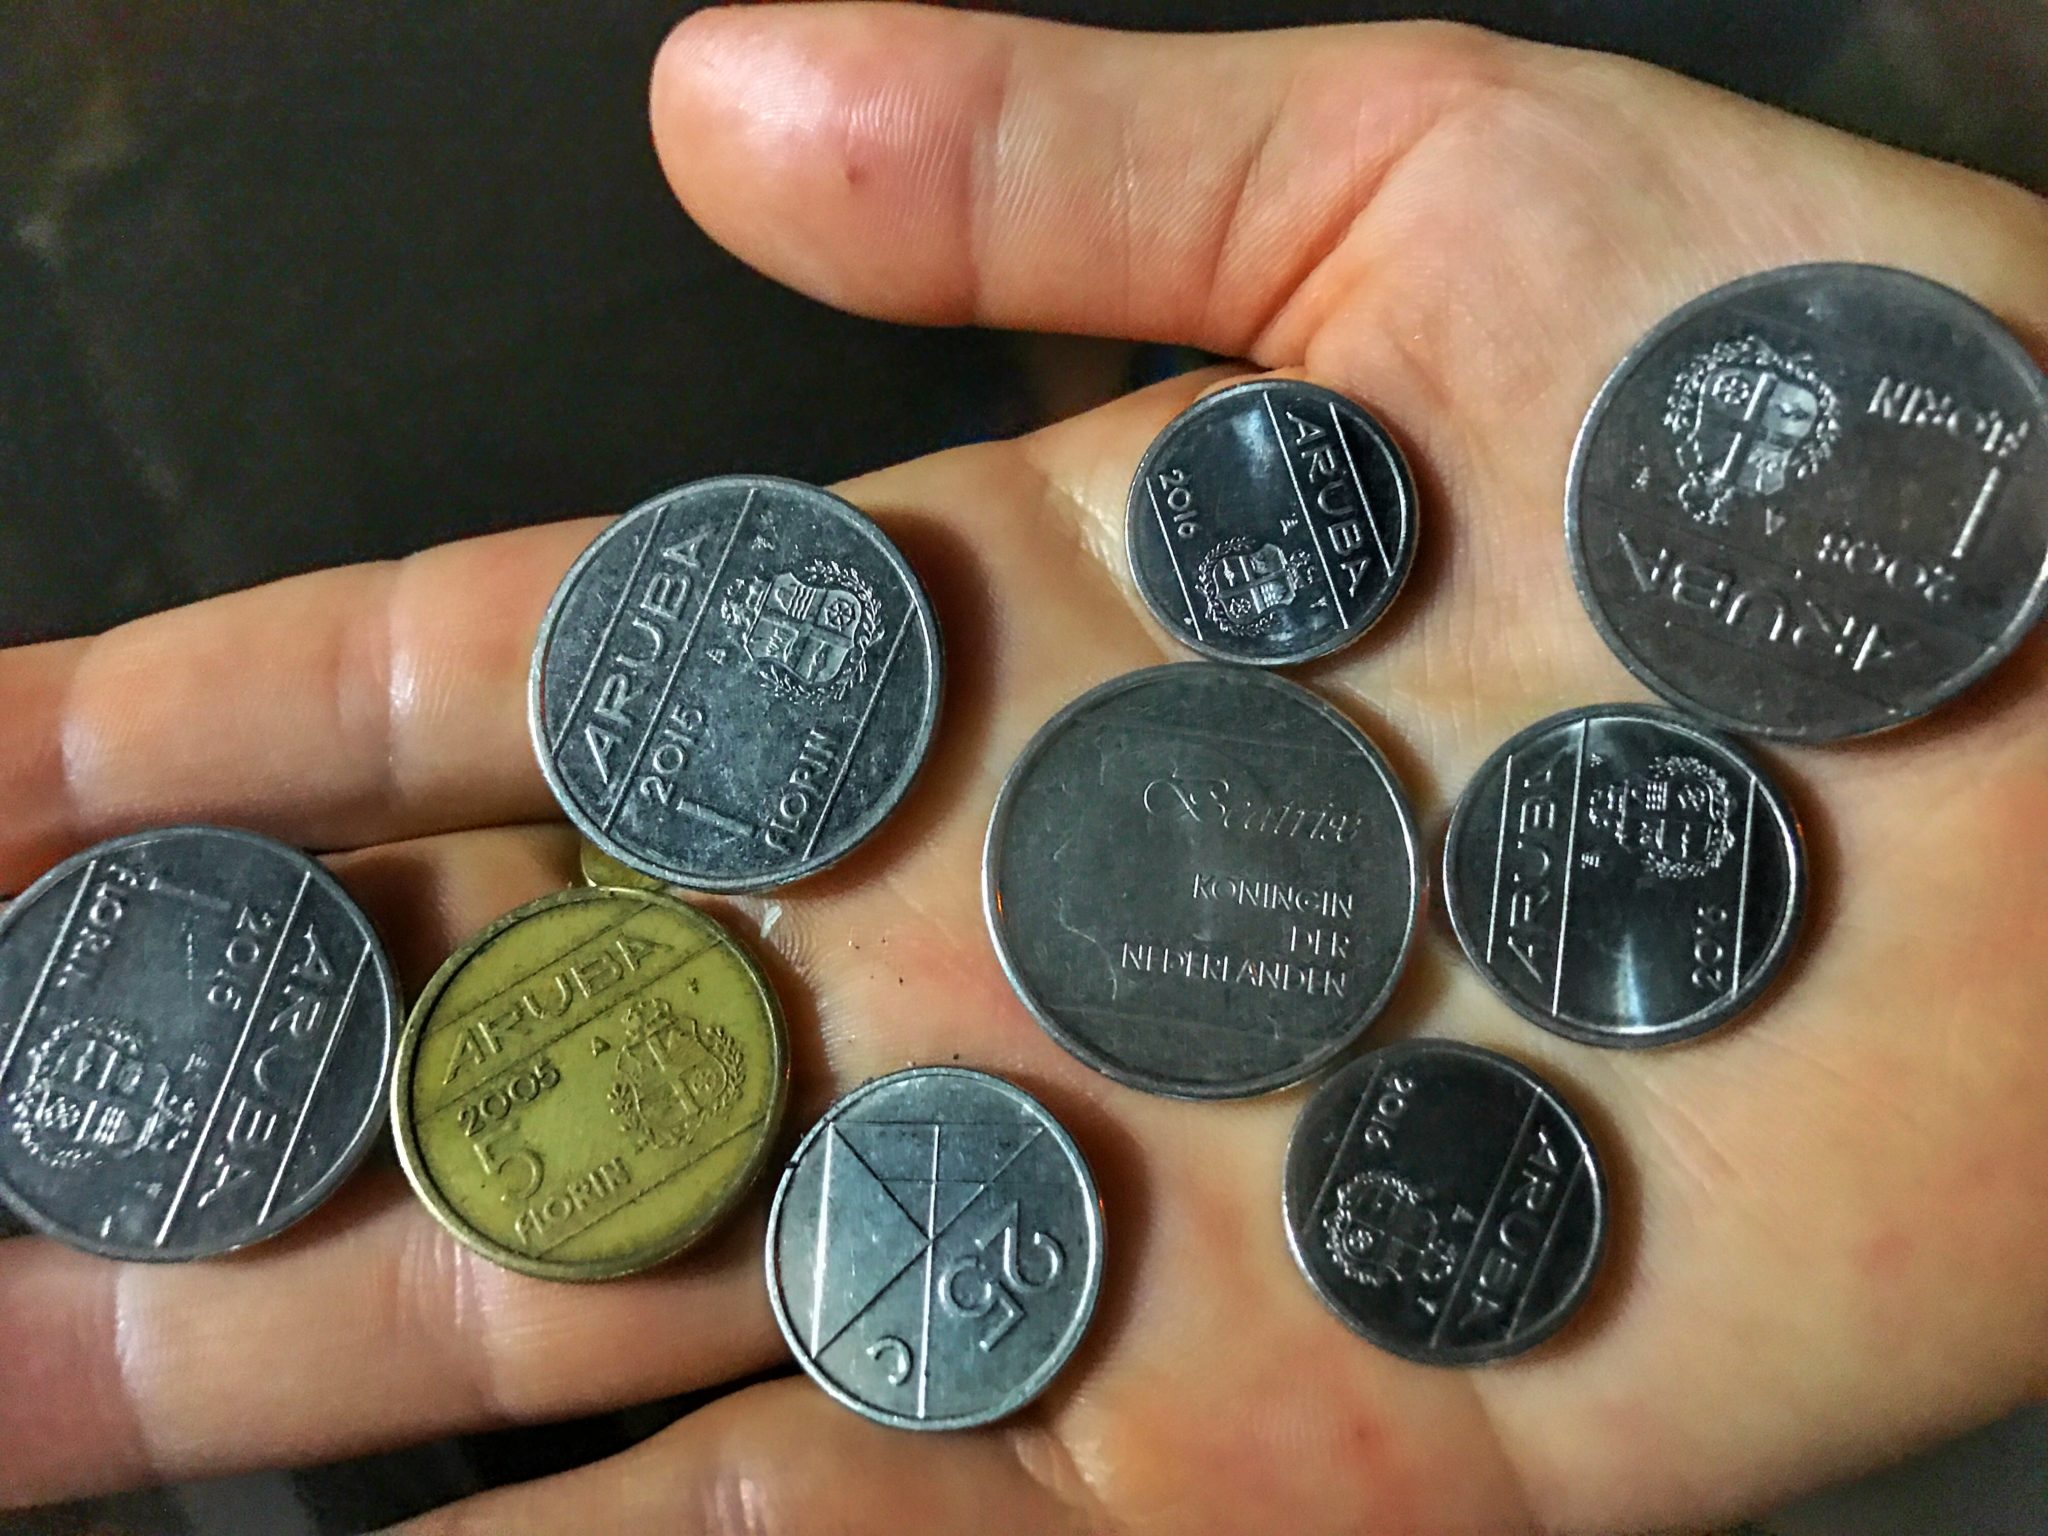 arubian coins in a hand